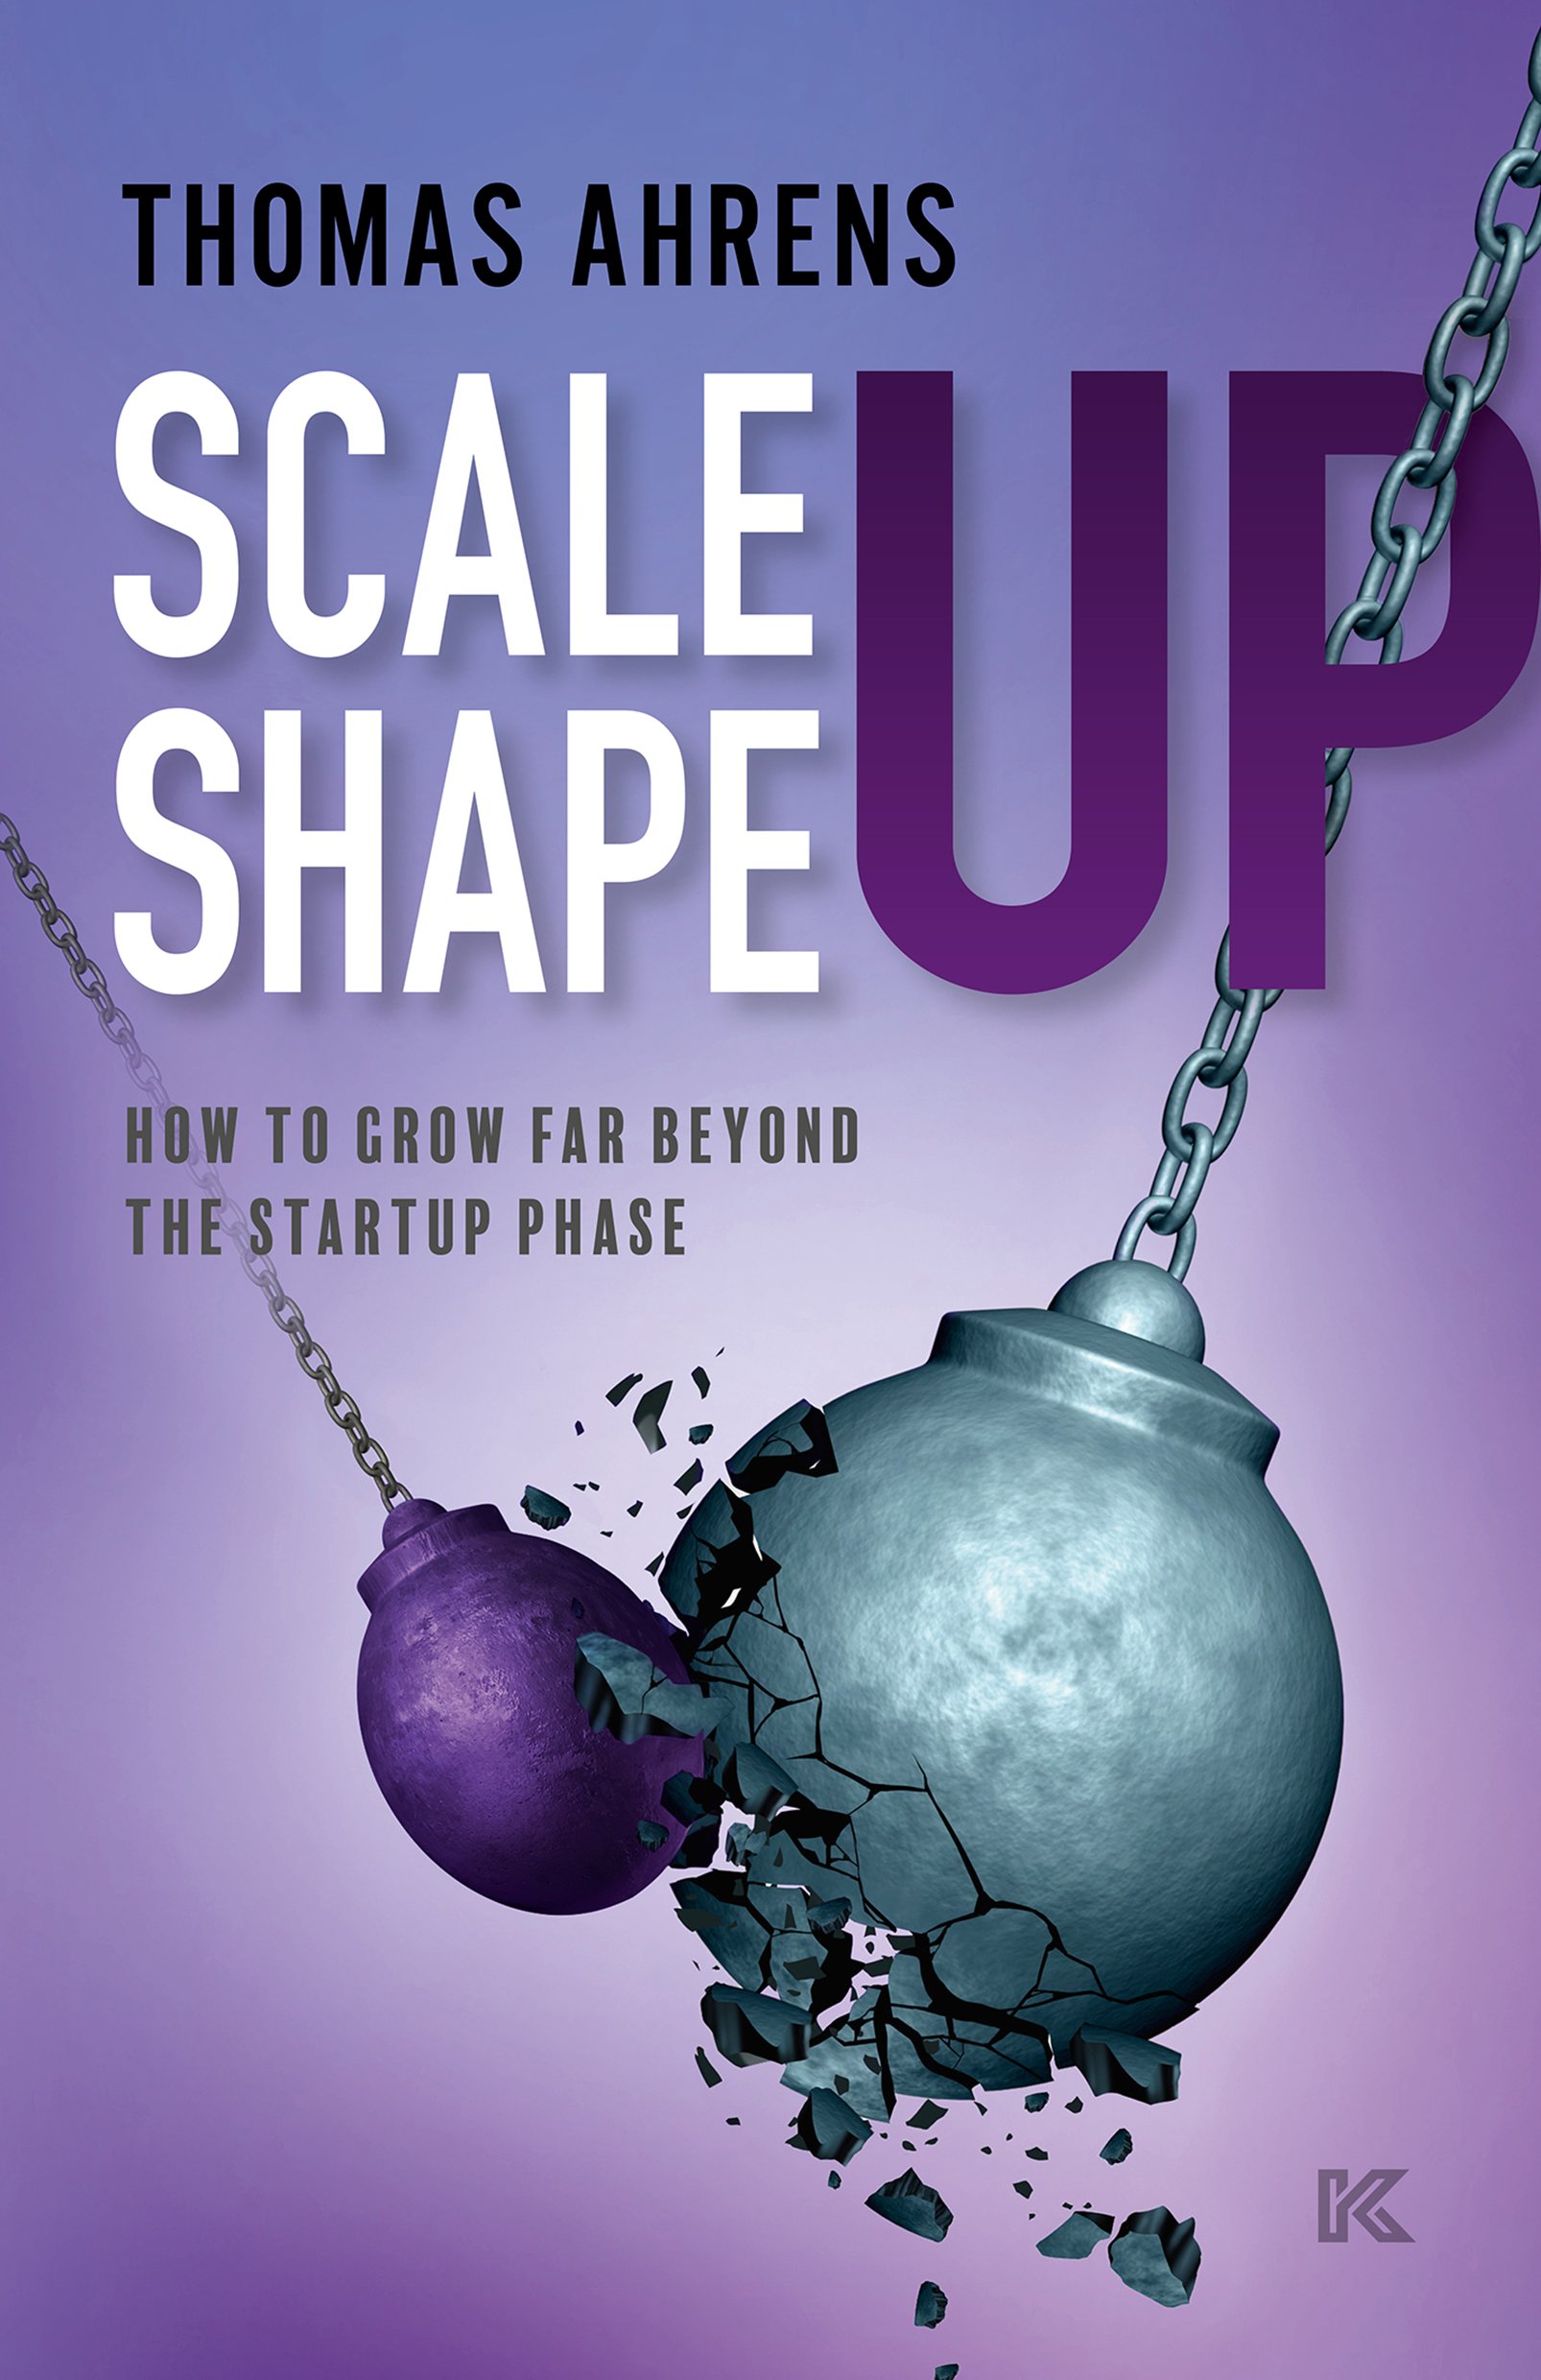 Scale up - Shape up